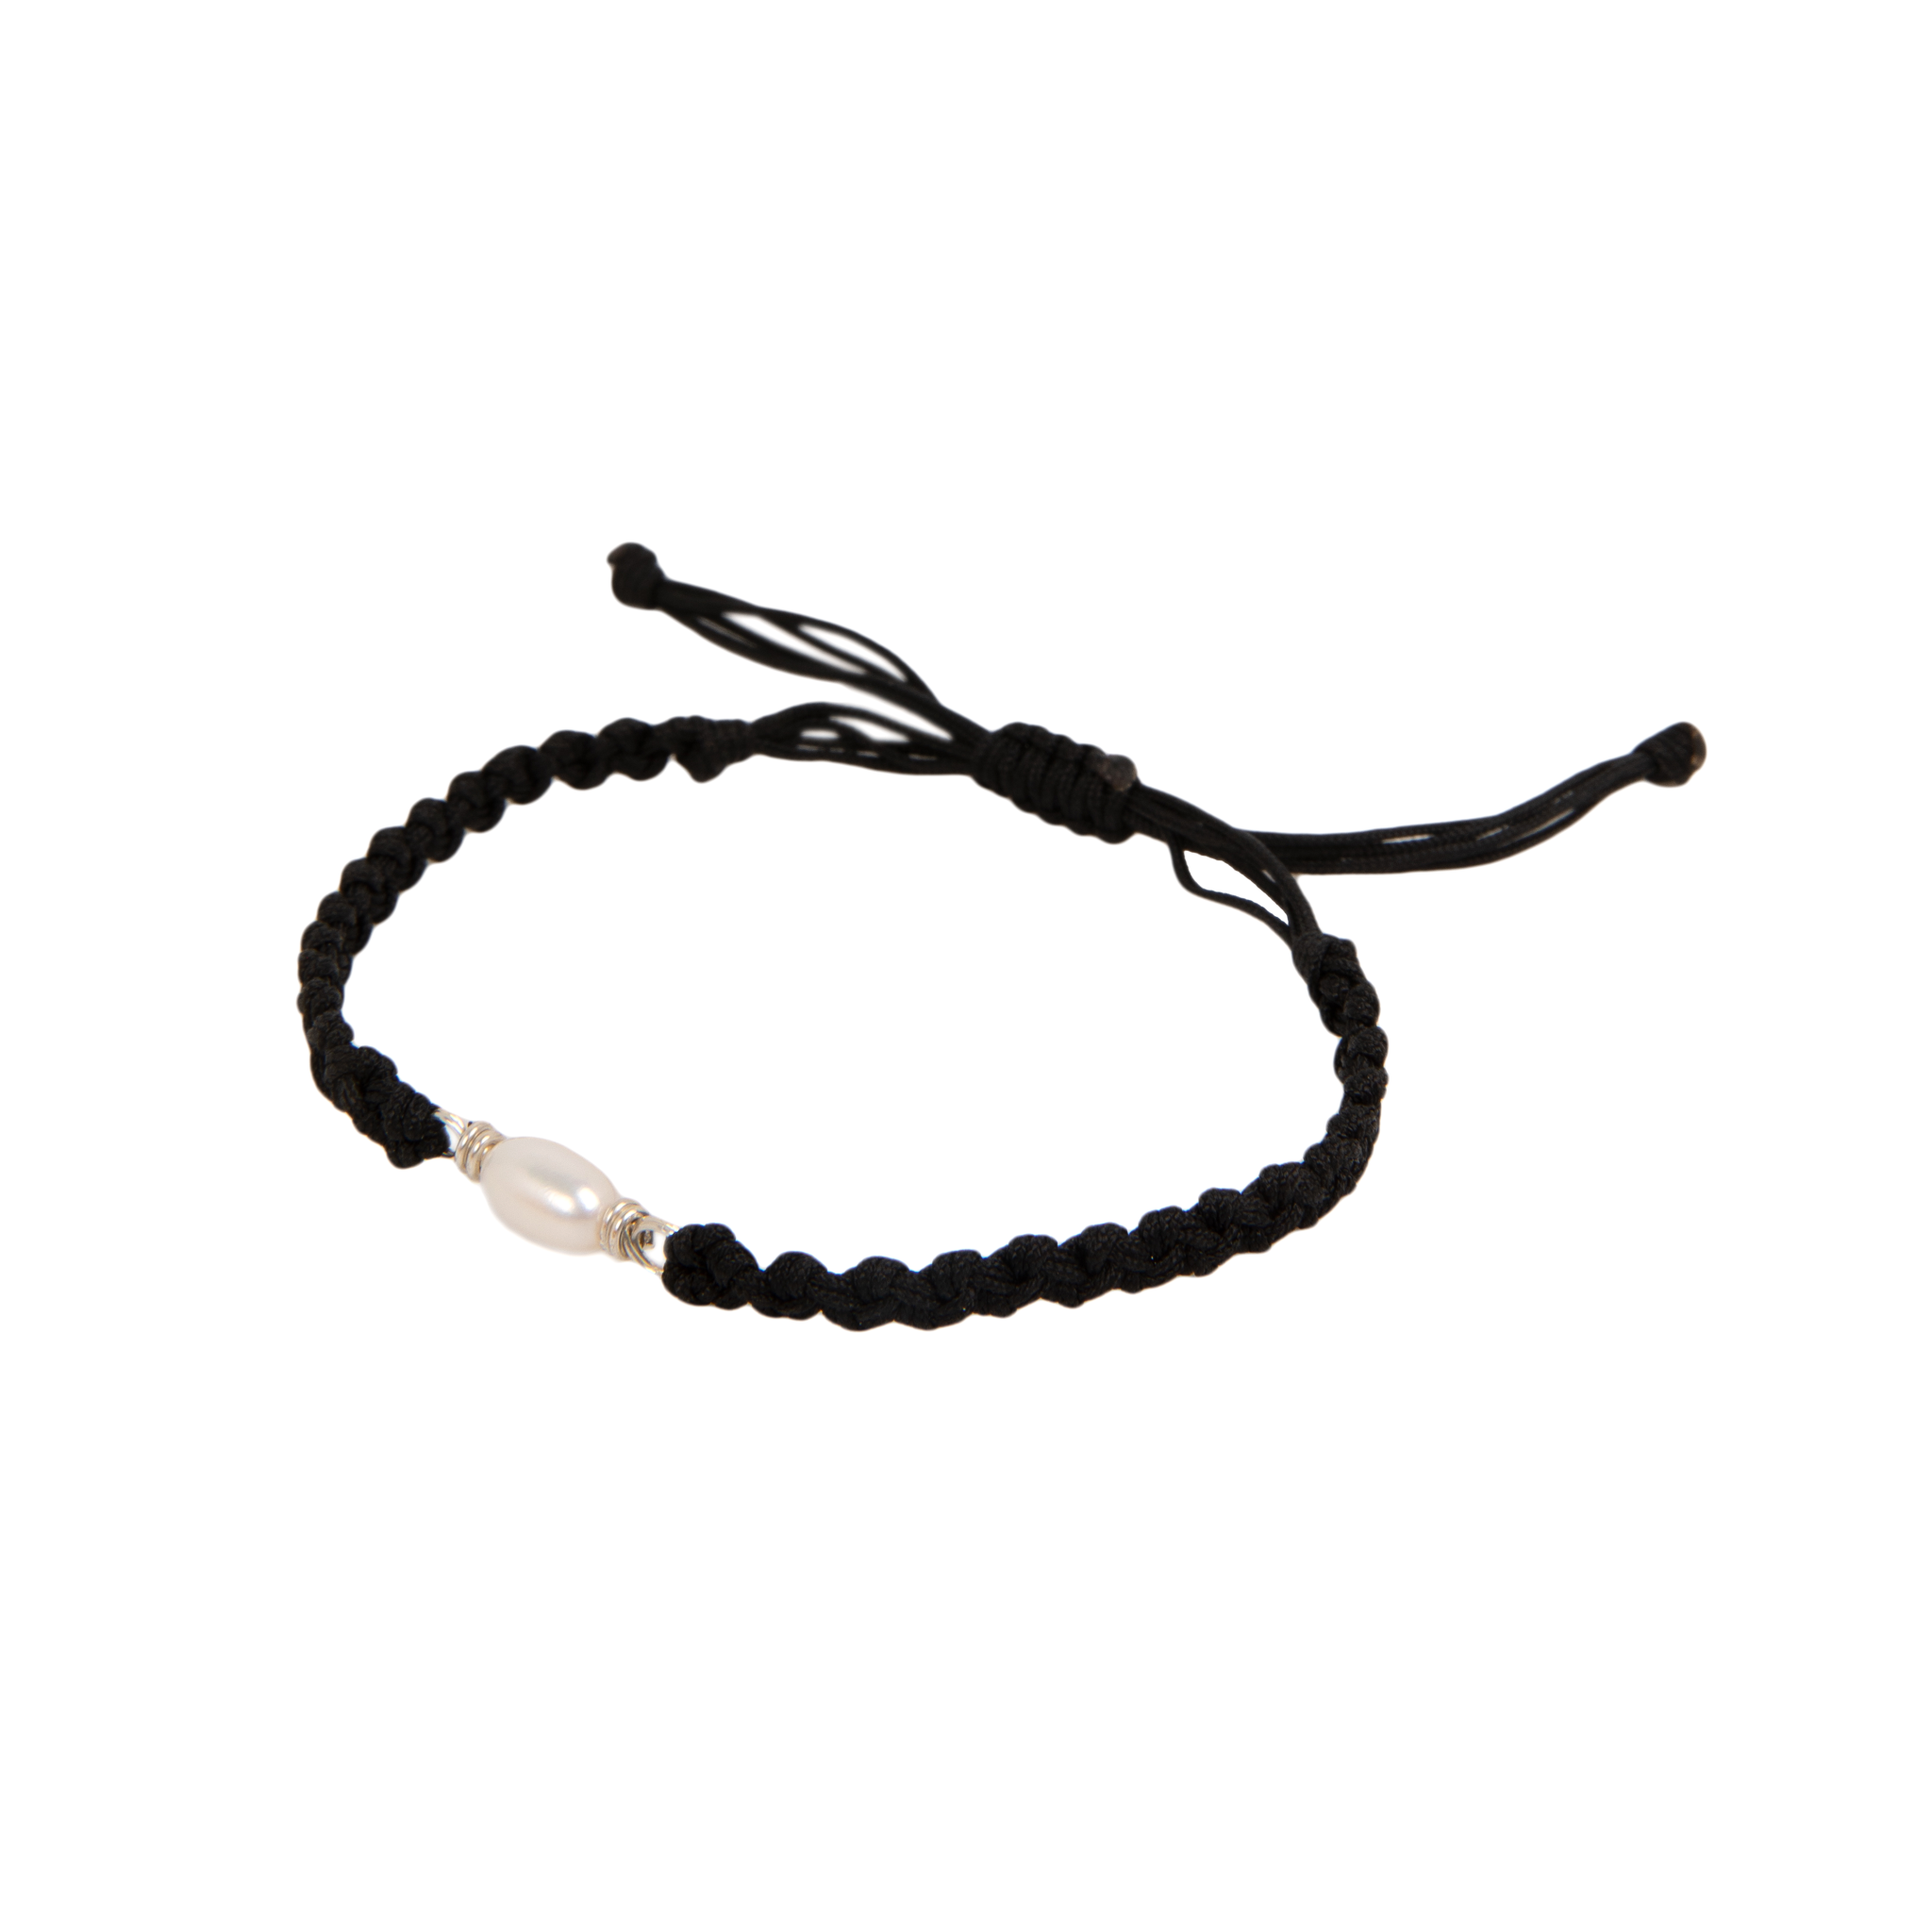 Handmade Friendship Bracelet #1 (Black Thread) - Pearl & Sterling Silver Bracelets TARBAY   